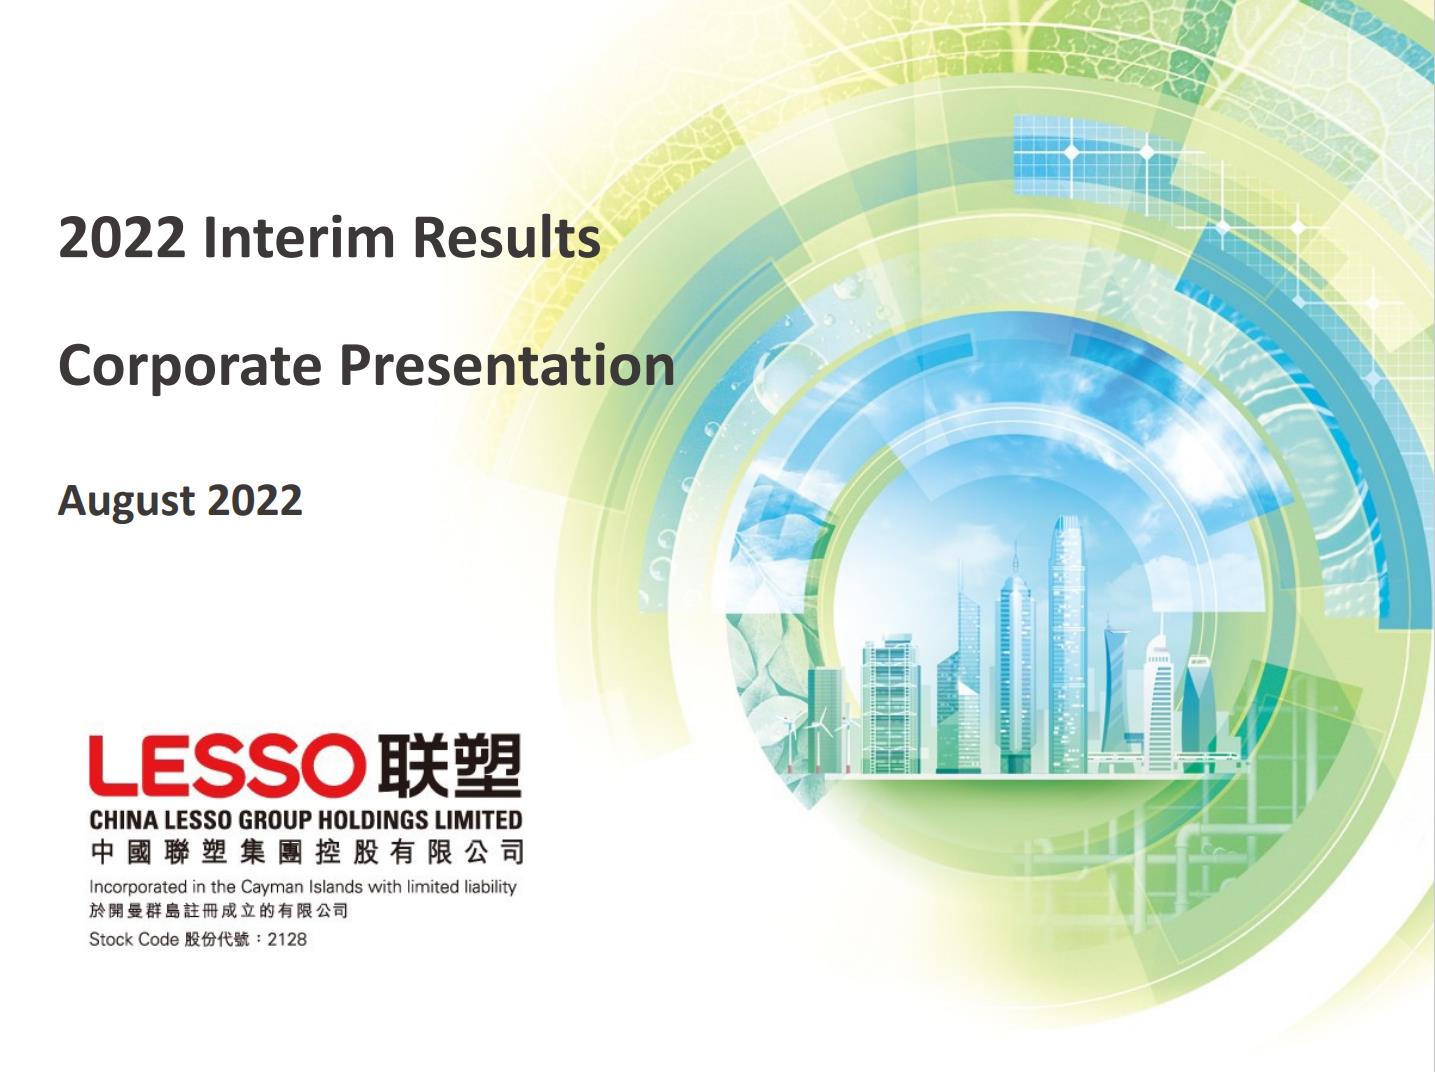 2022 Interim Results Corporate Presentation